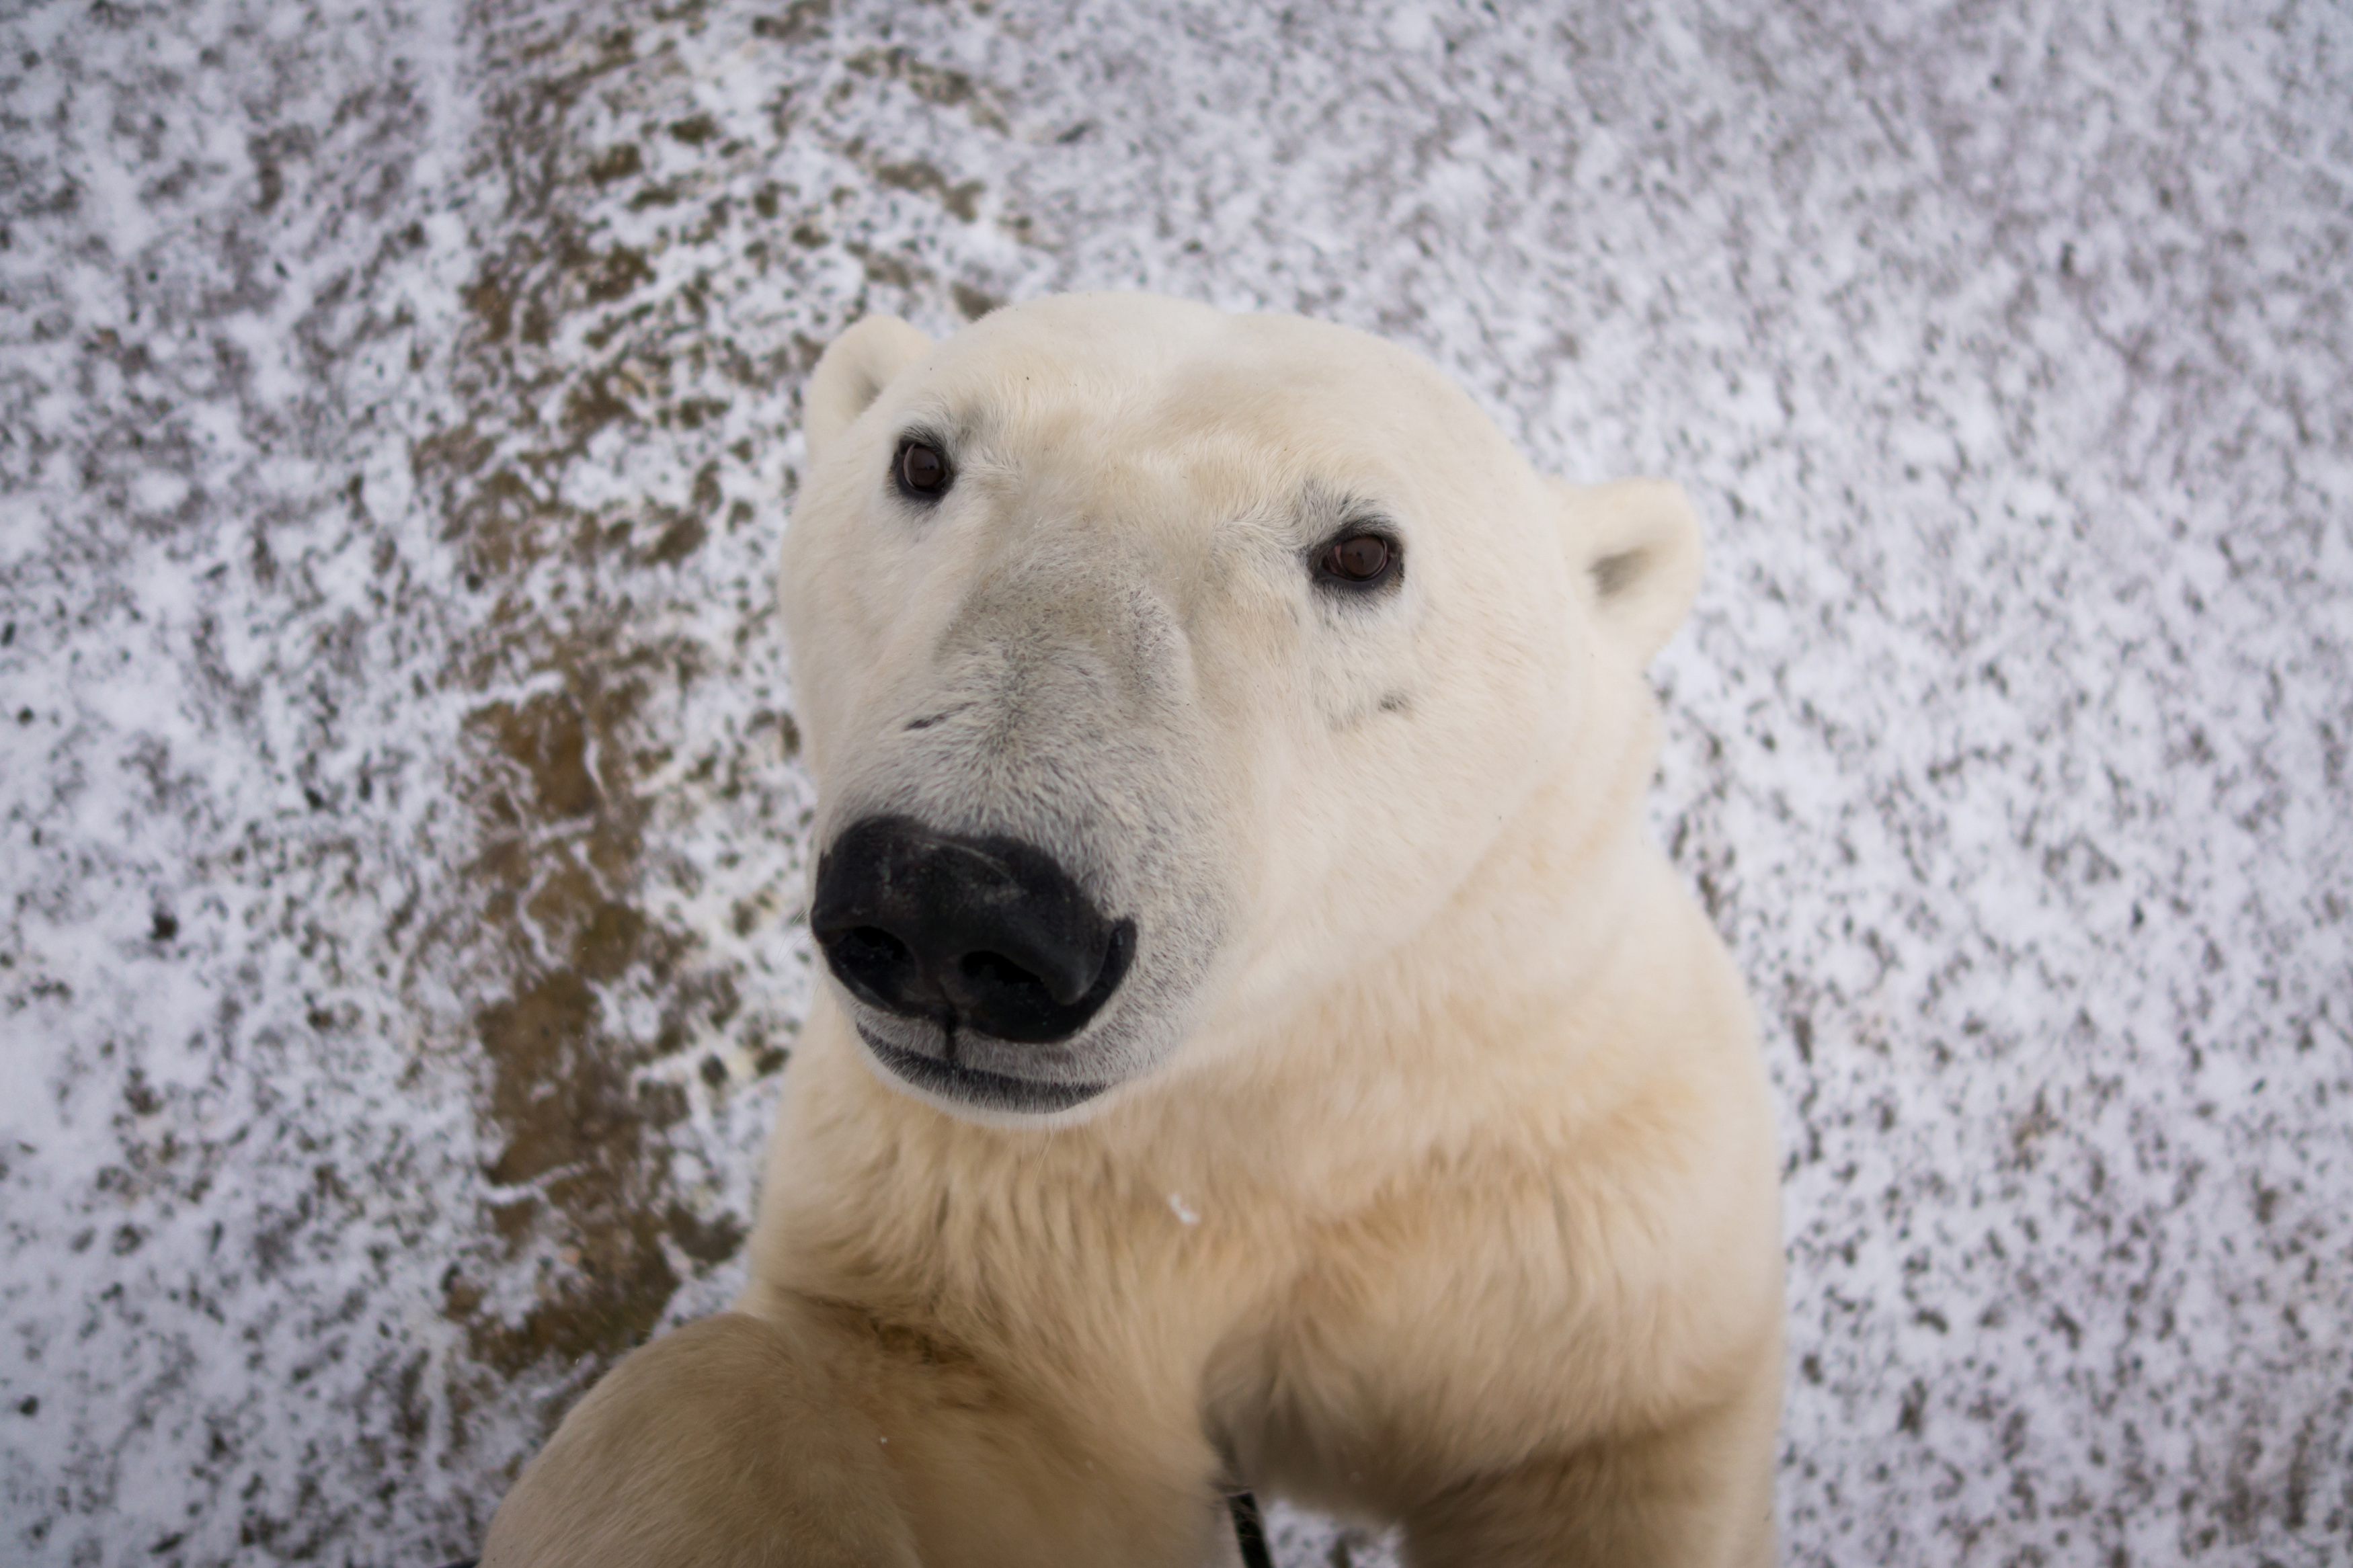 Incredible close-ups of nosey polar bear investigating camera ...